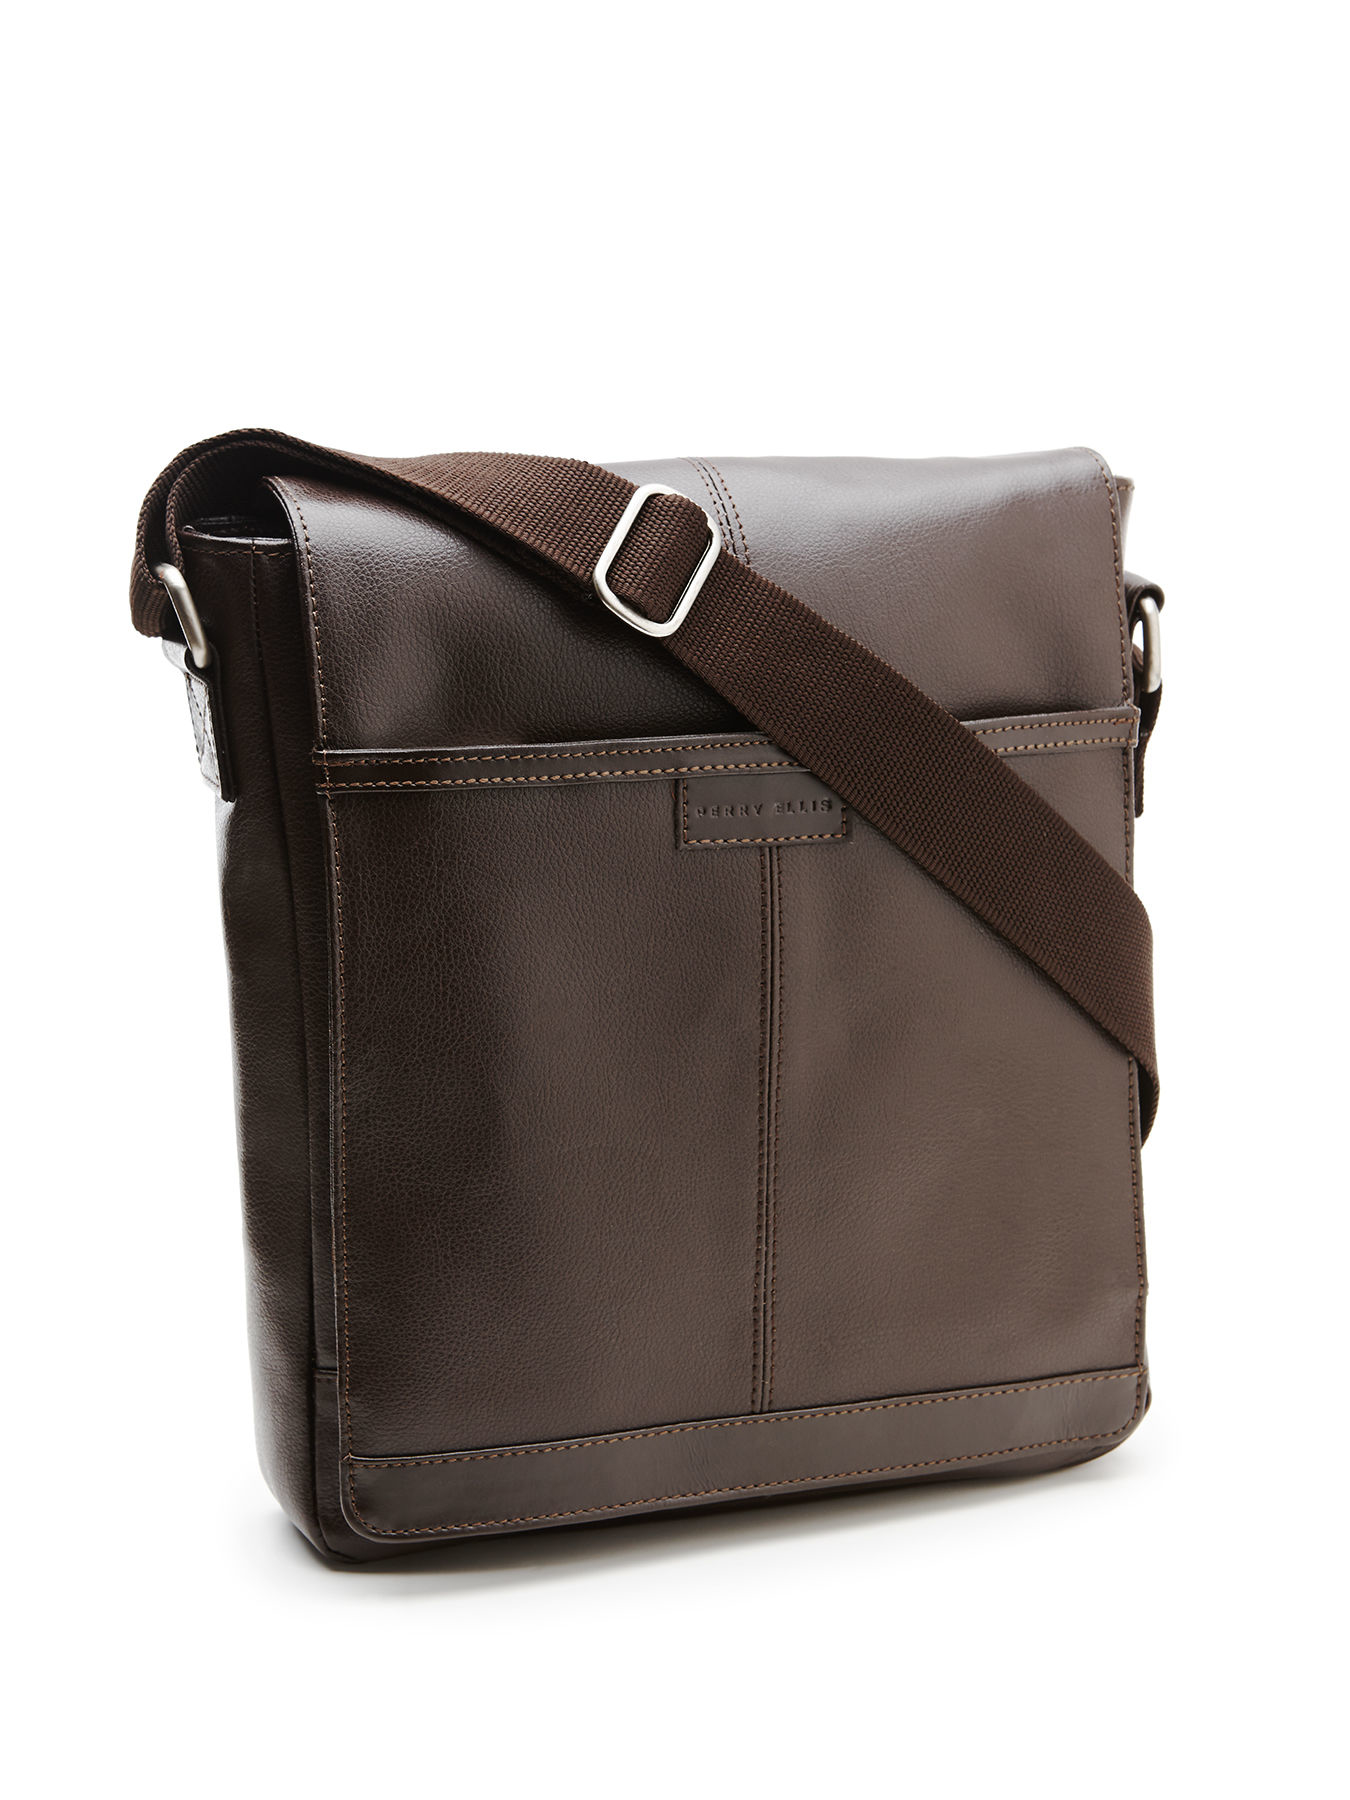 Perry ellis Leather Crossbody Bag in Brown for Men | Lyst